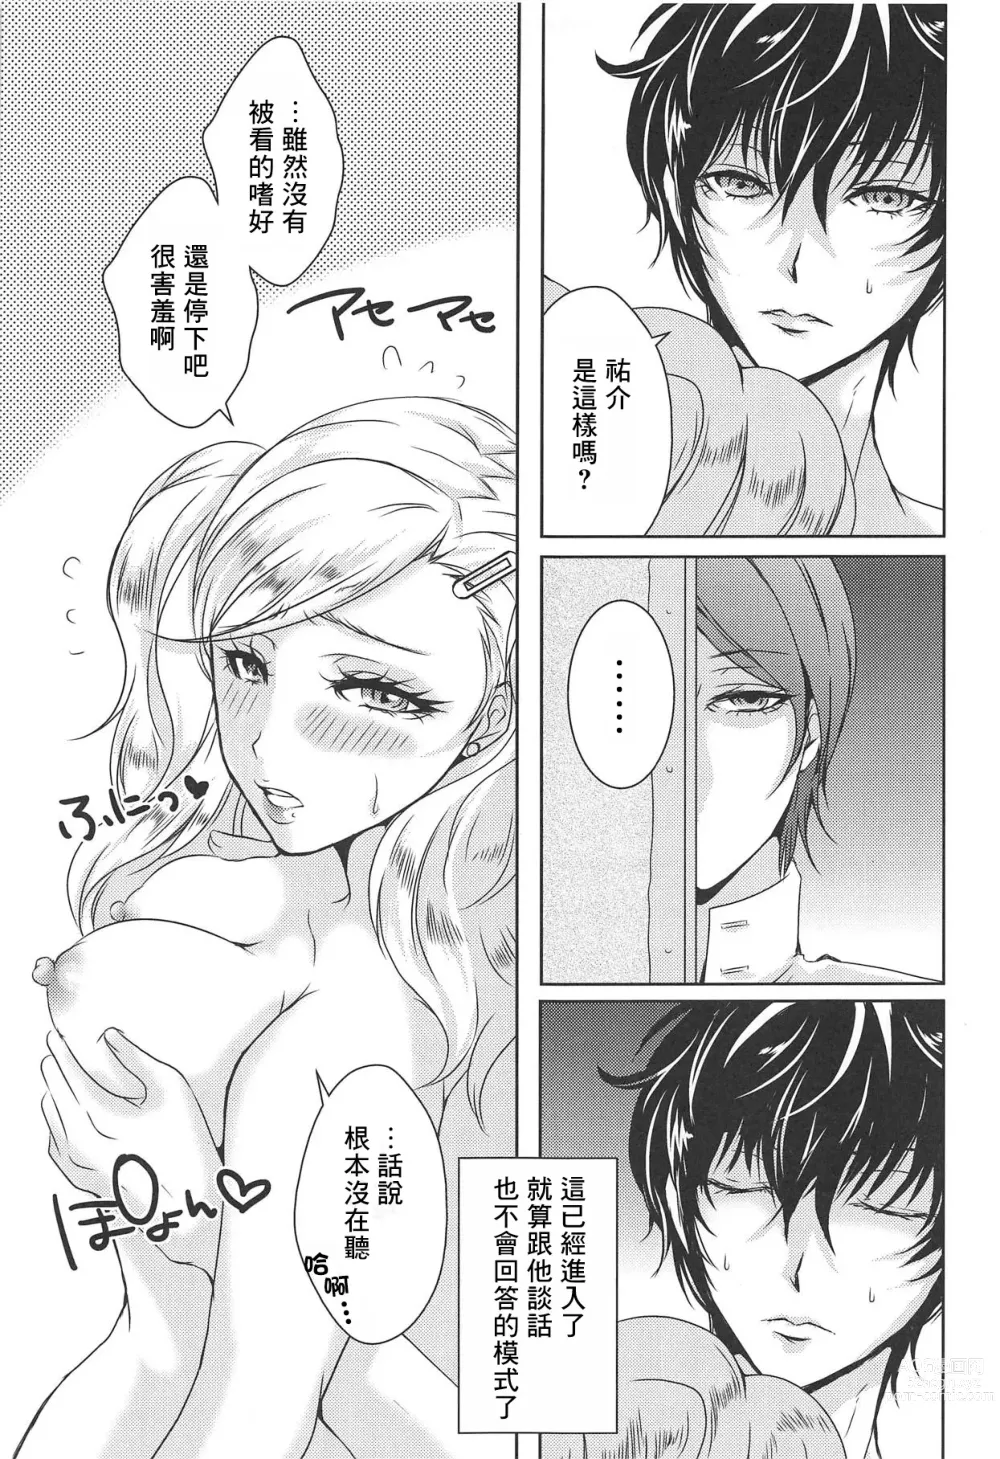 Page 6 of doujinshi OMG!!